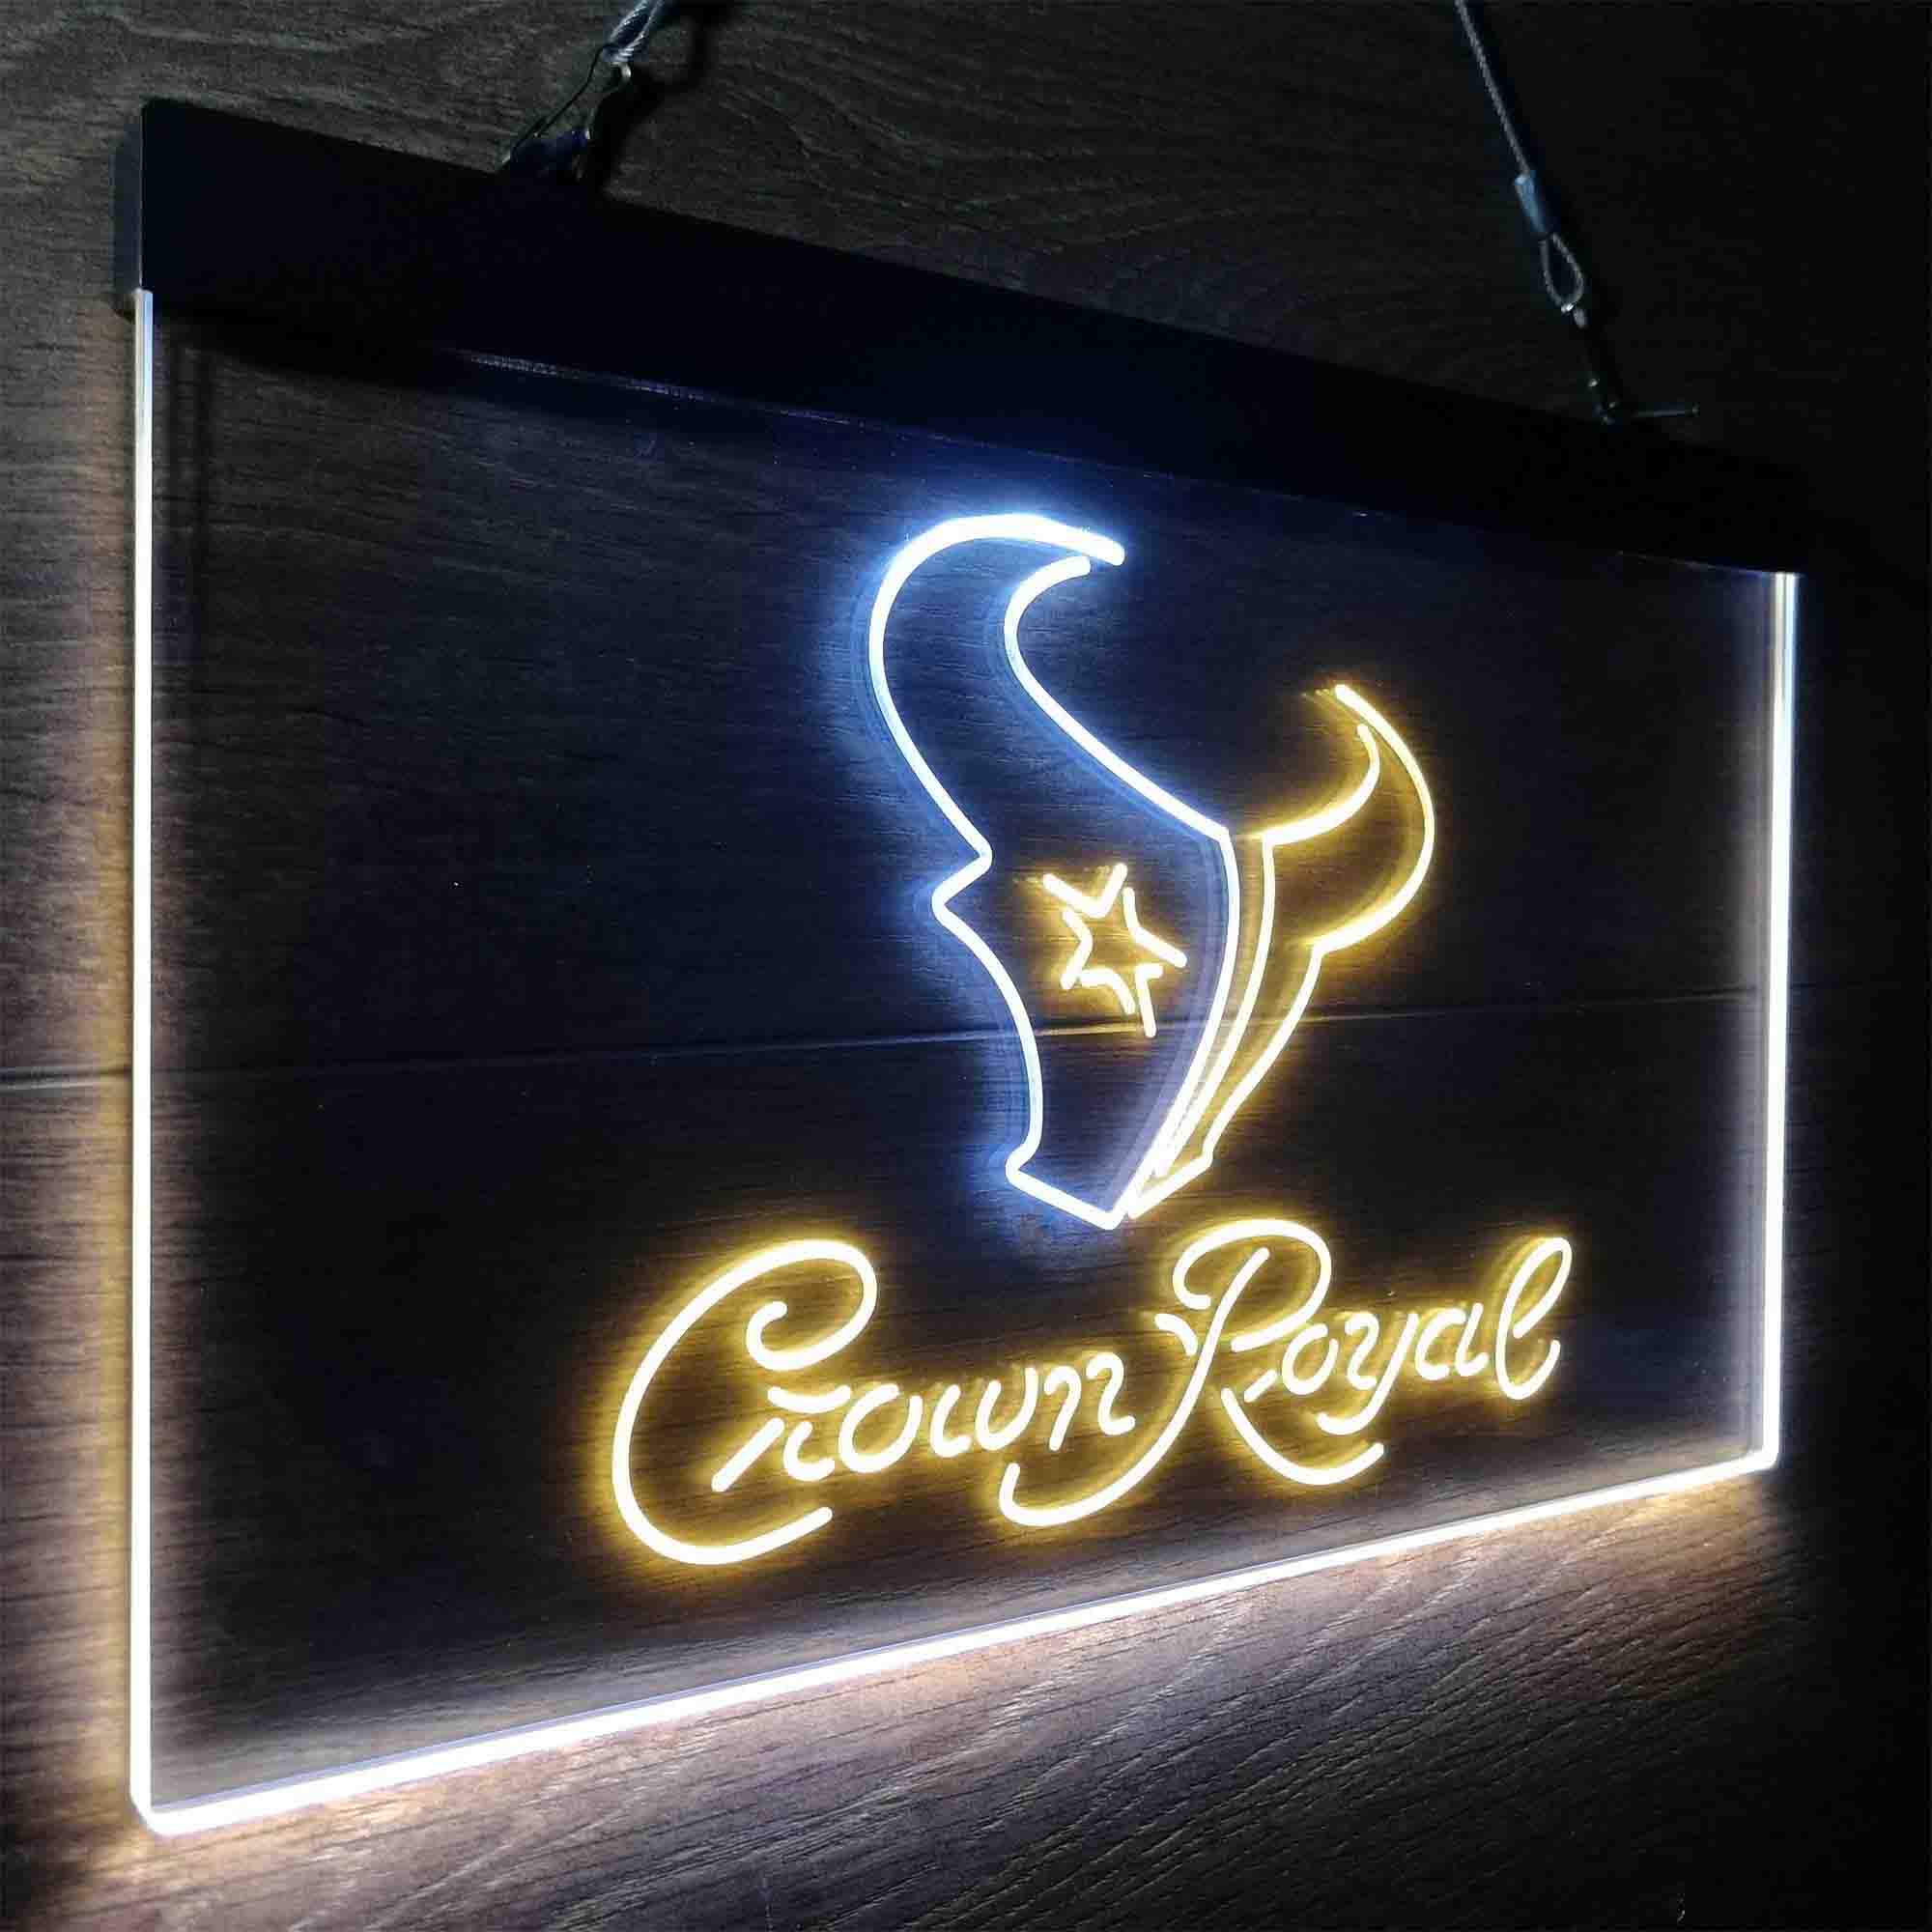 Crown Royal Bar Houston Texans Est. 2002 LED Neon Sign